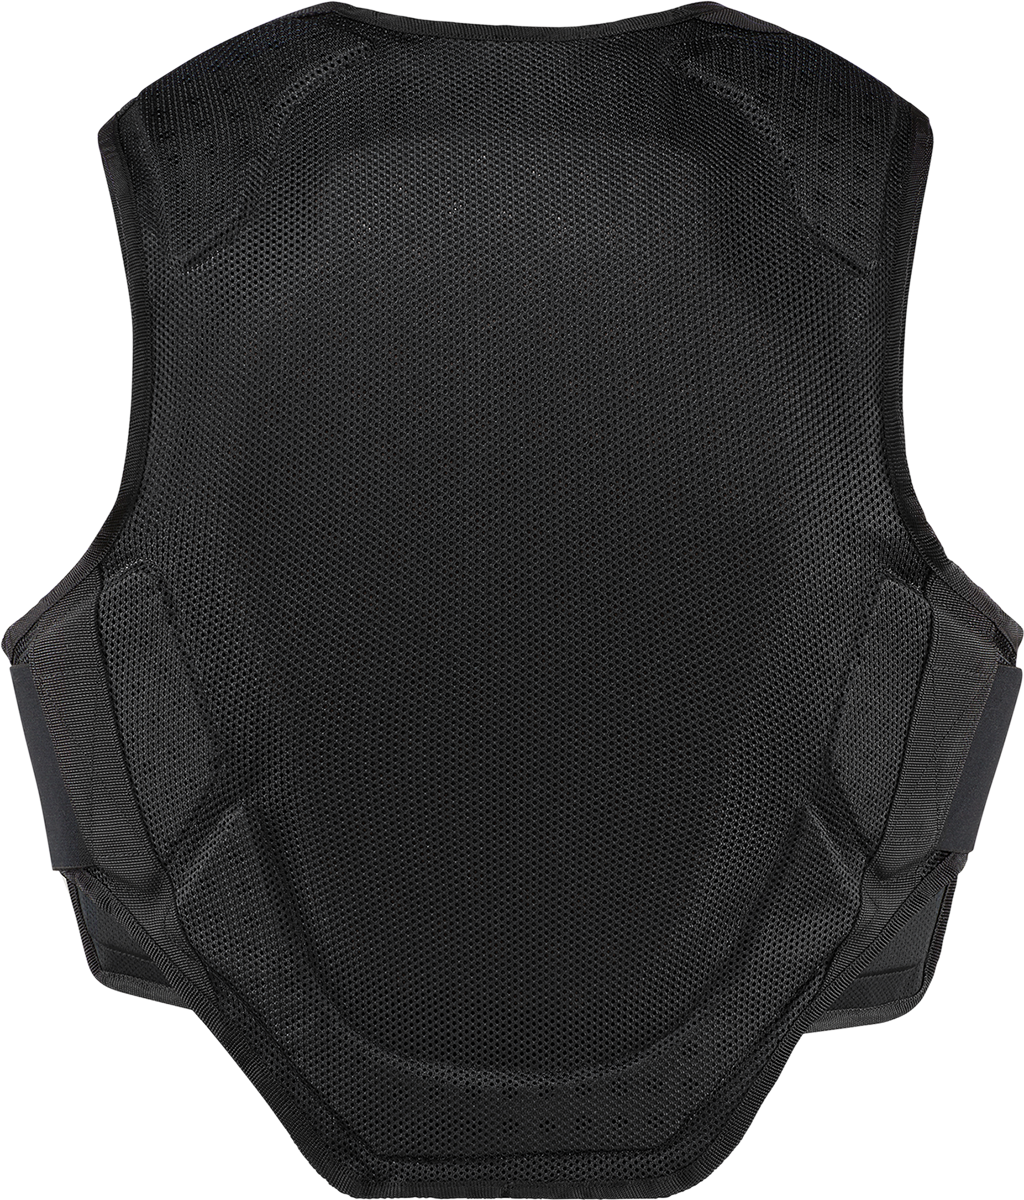 Softcore™ Vest - Black - Medium/Large - Lutzka's Garage